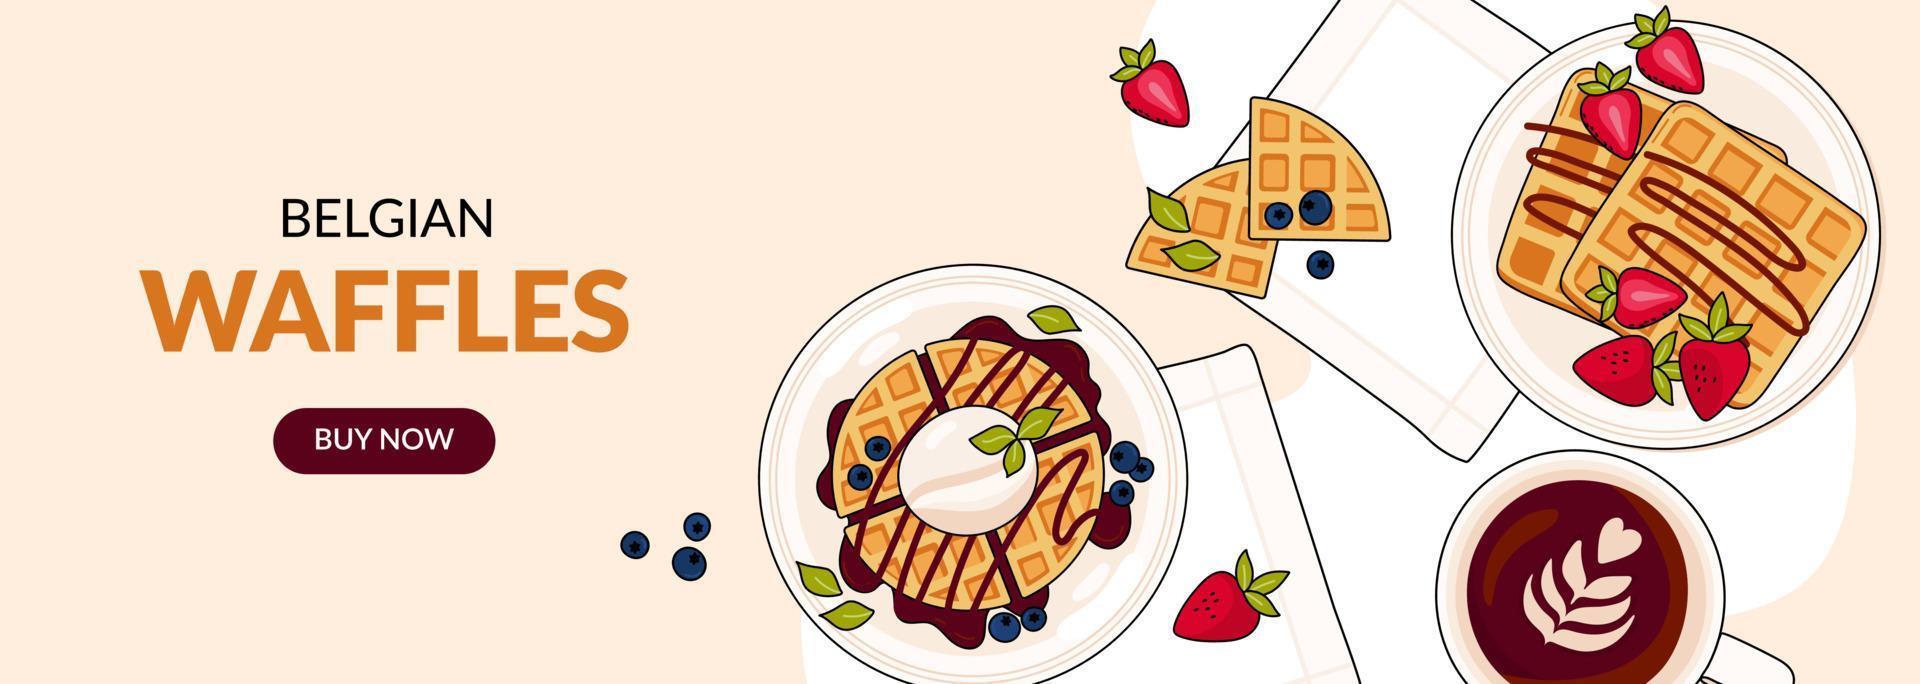 Banner design with Belgian waffles. Banner, website, advertising, menu. Vector illustration in doodle style